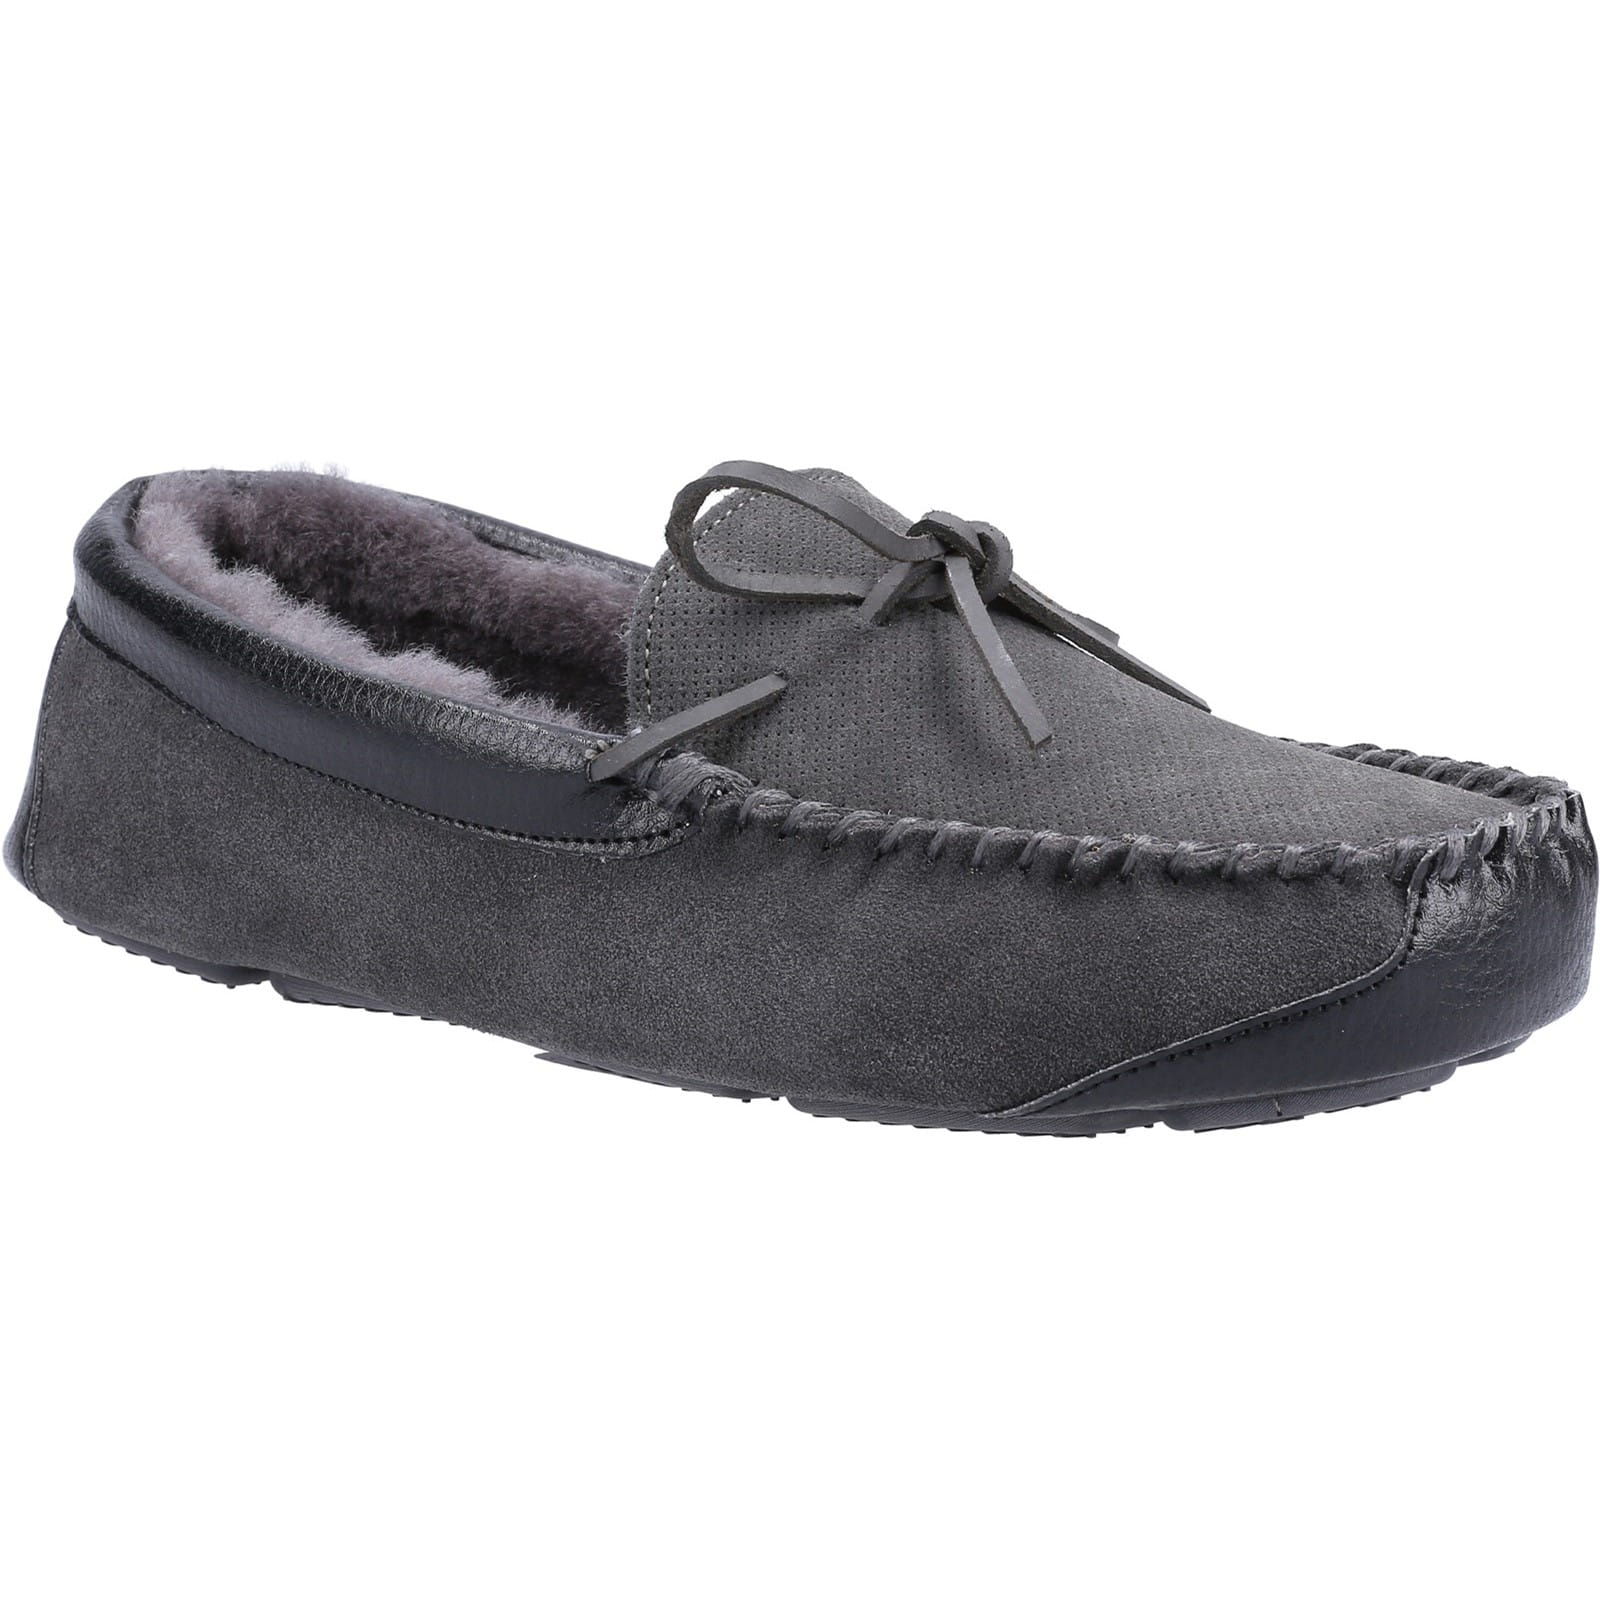 Cotswold Men's Northwood Slip On Sheepskin Moccasin Slippers Shoes - UK 10